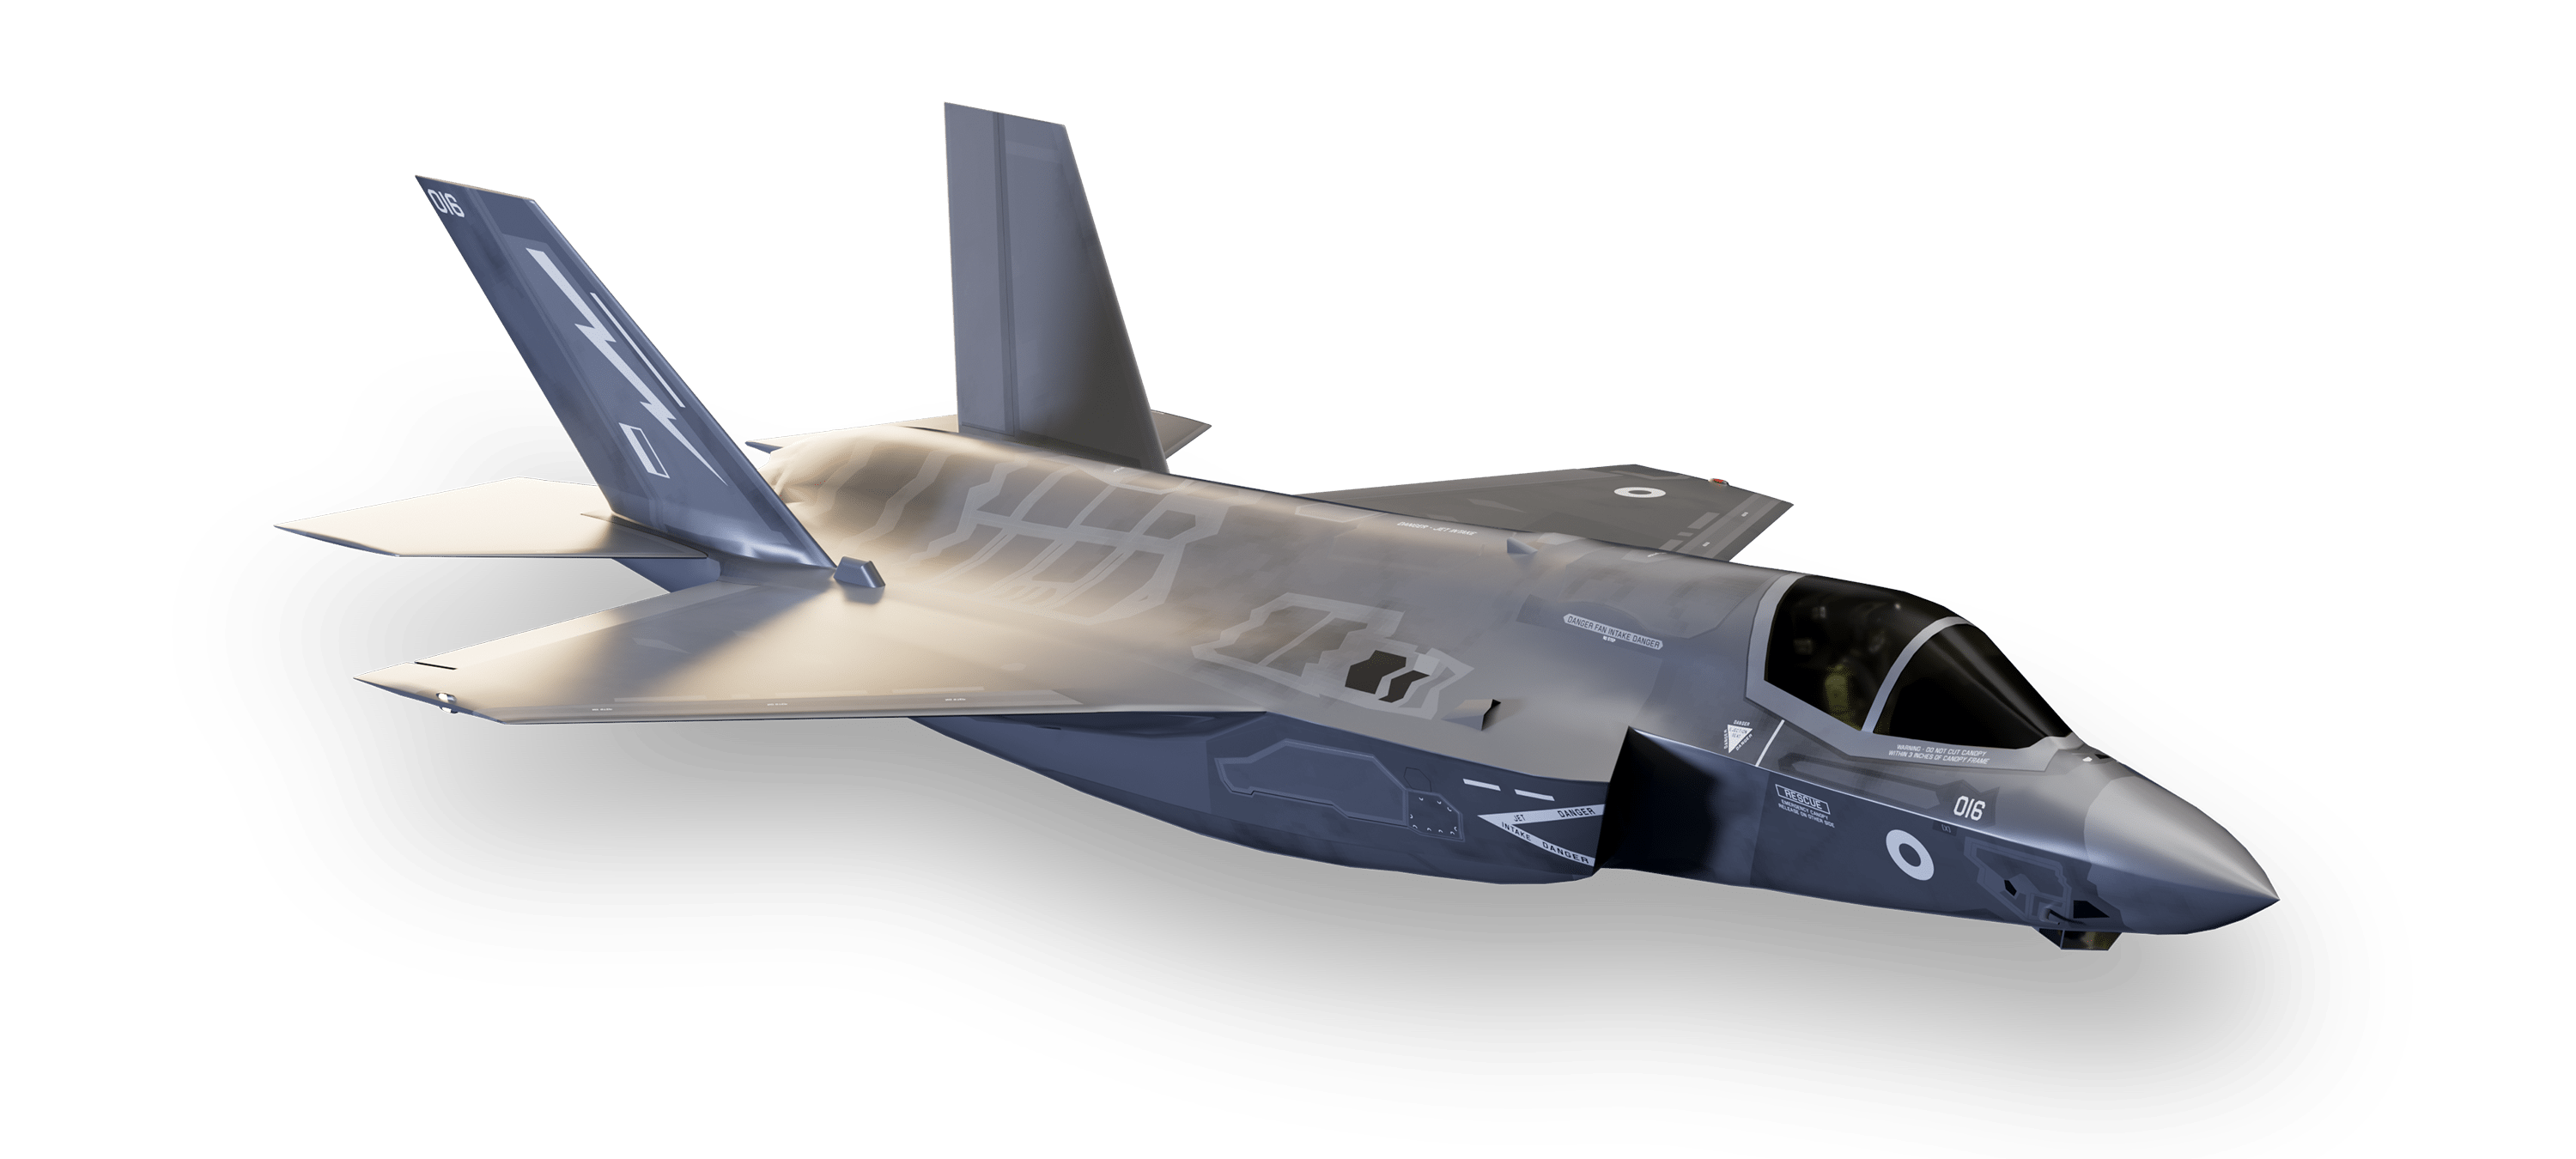 3D visualisation of F-35 Lightning jet